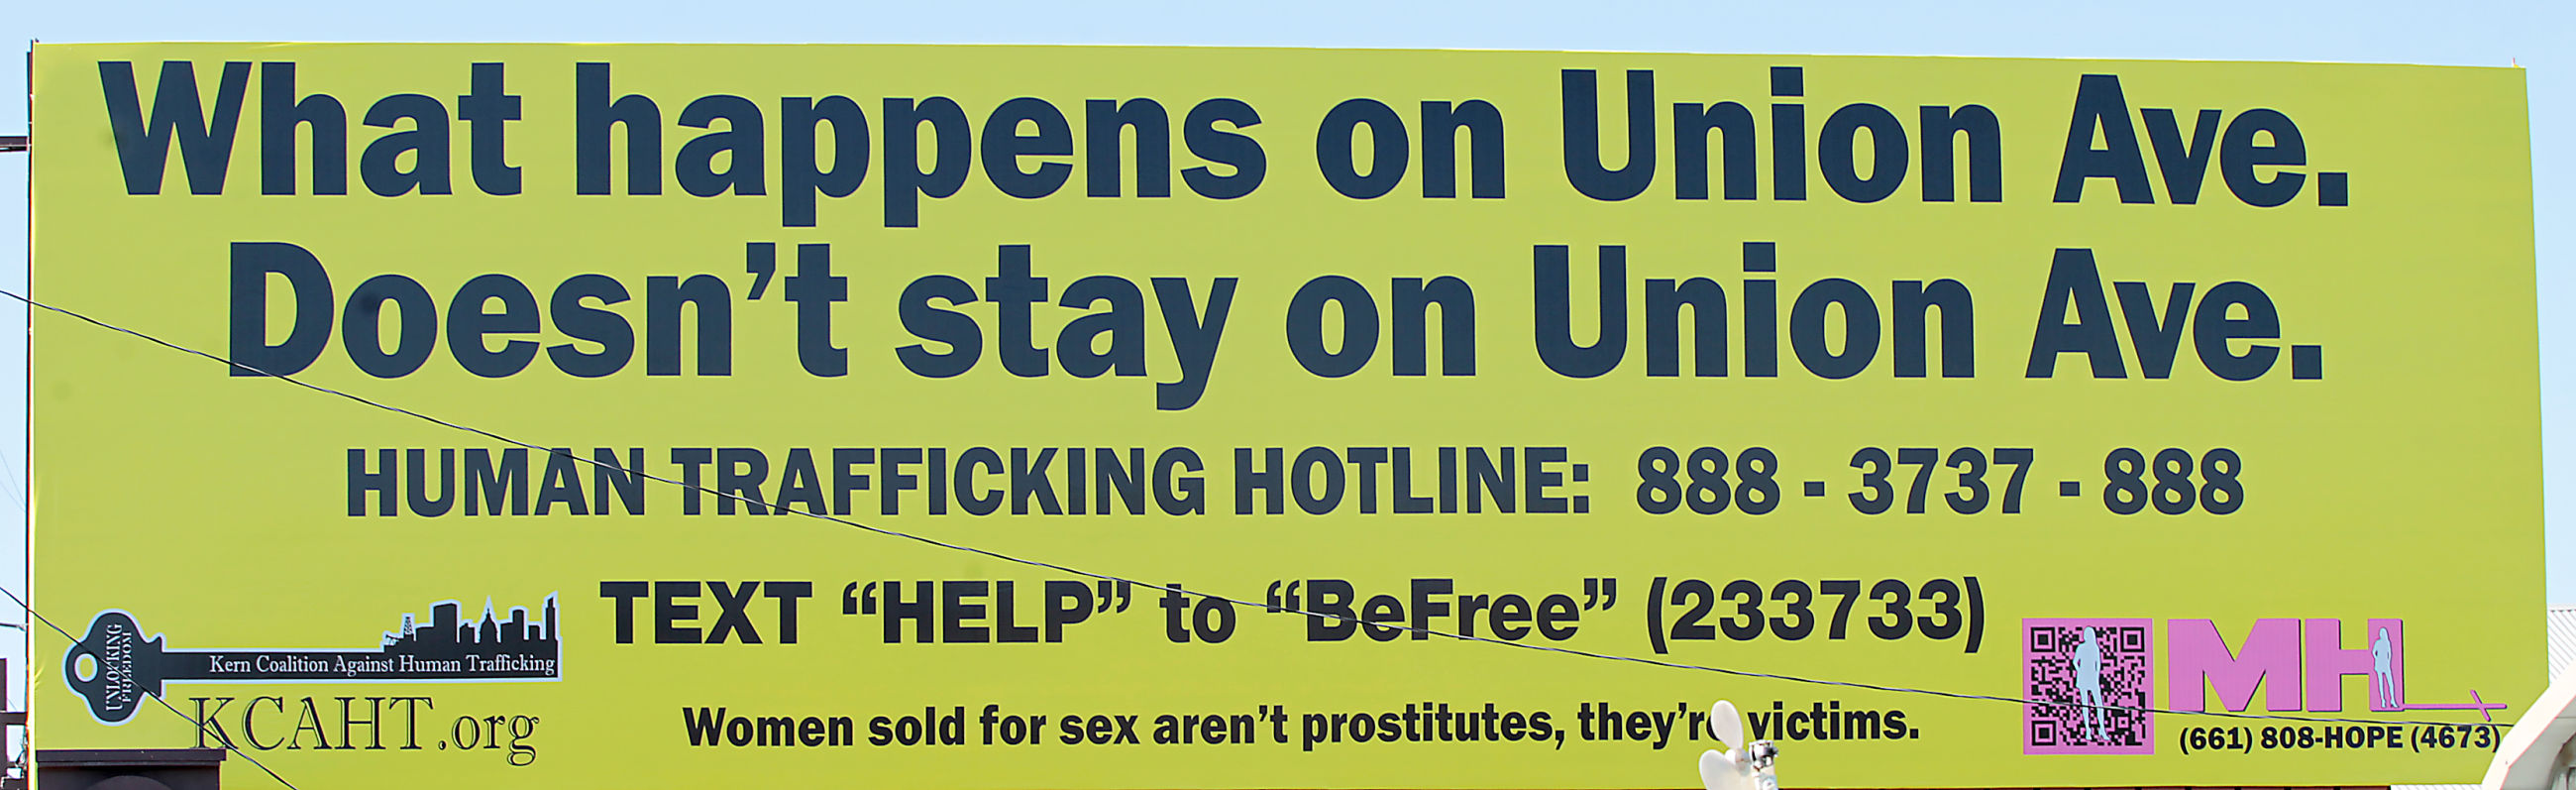 Human trafficking subject of Union Avenue billboard News bakersfield image